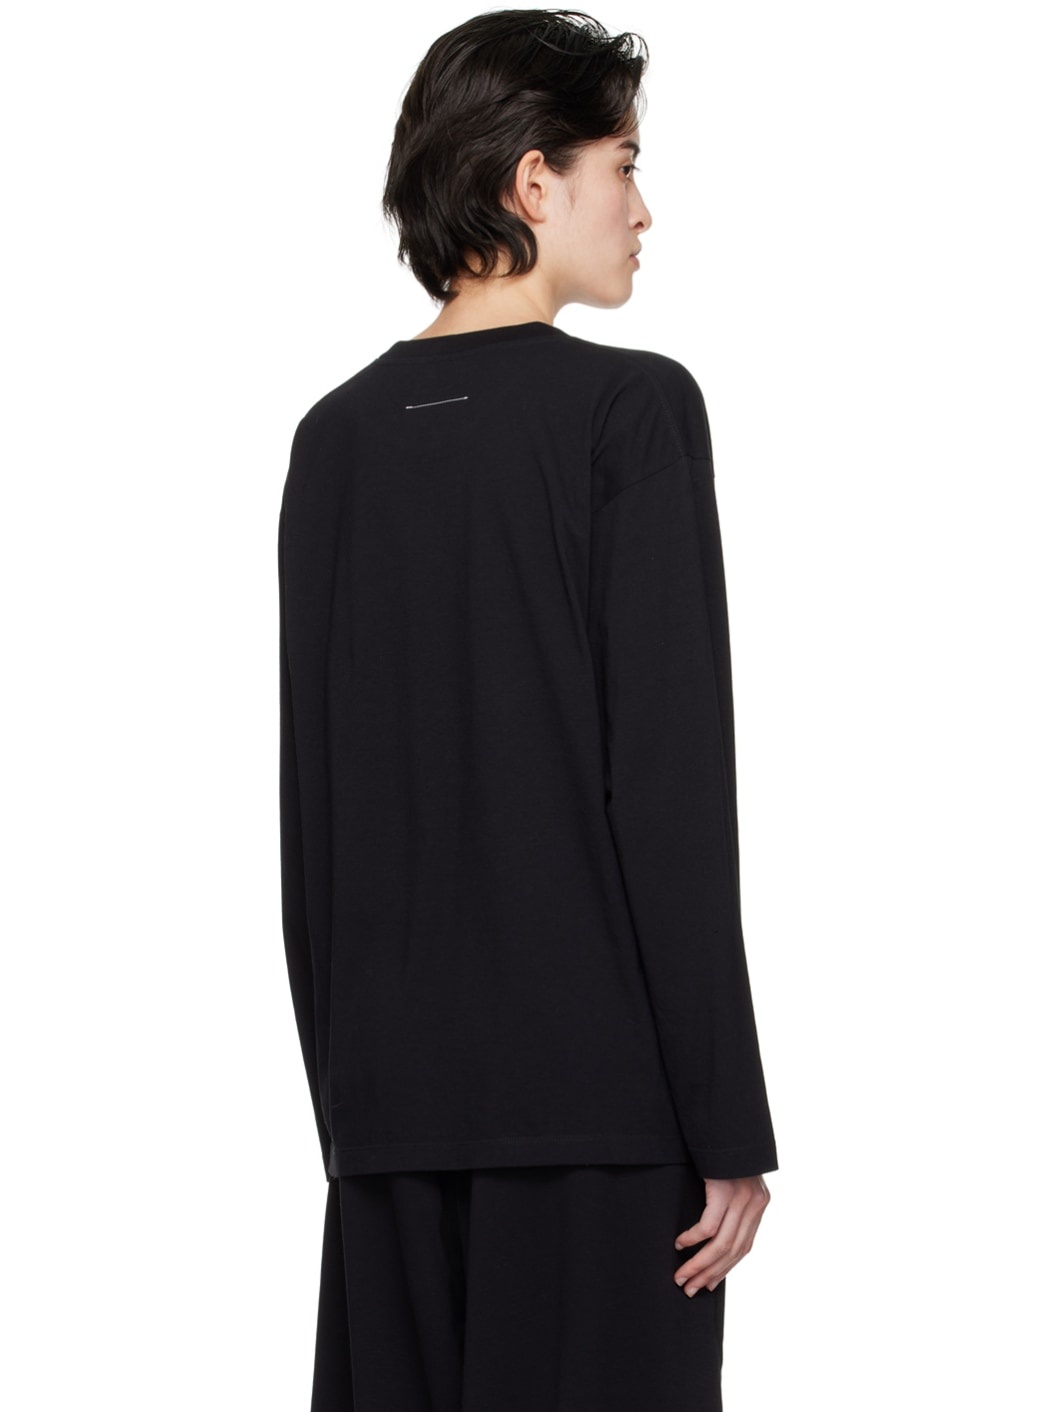 Black Graphic Long Sleeve T-Shirt - 3